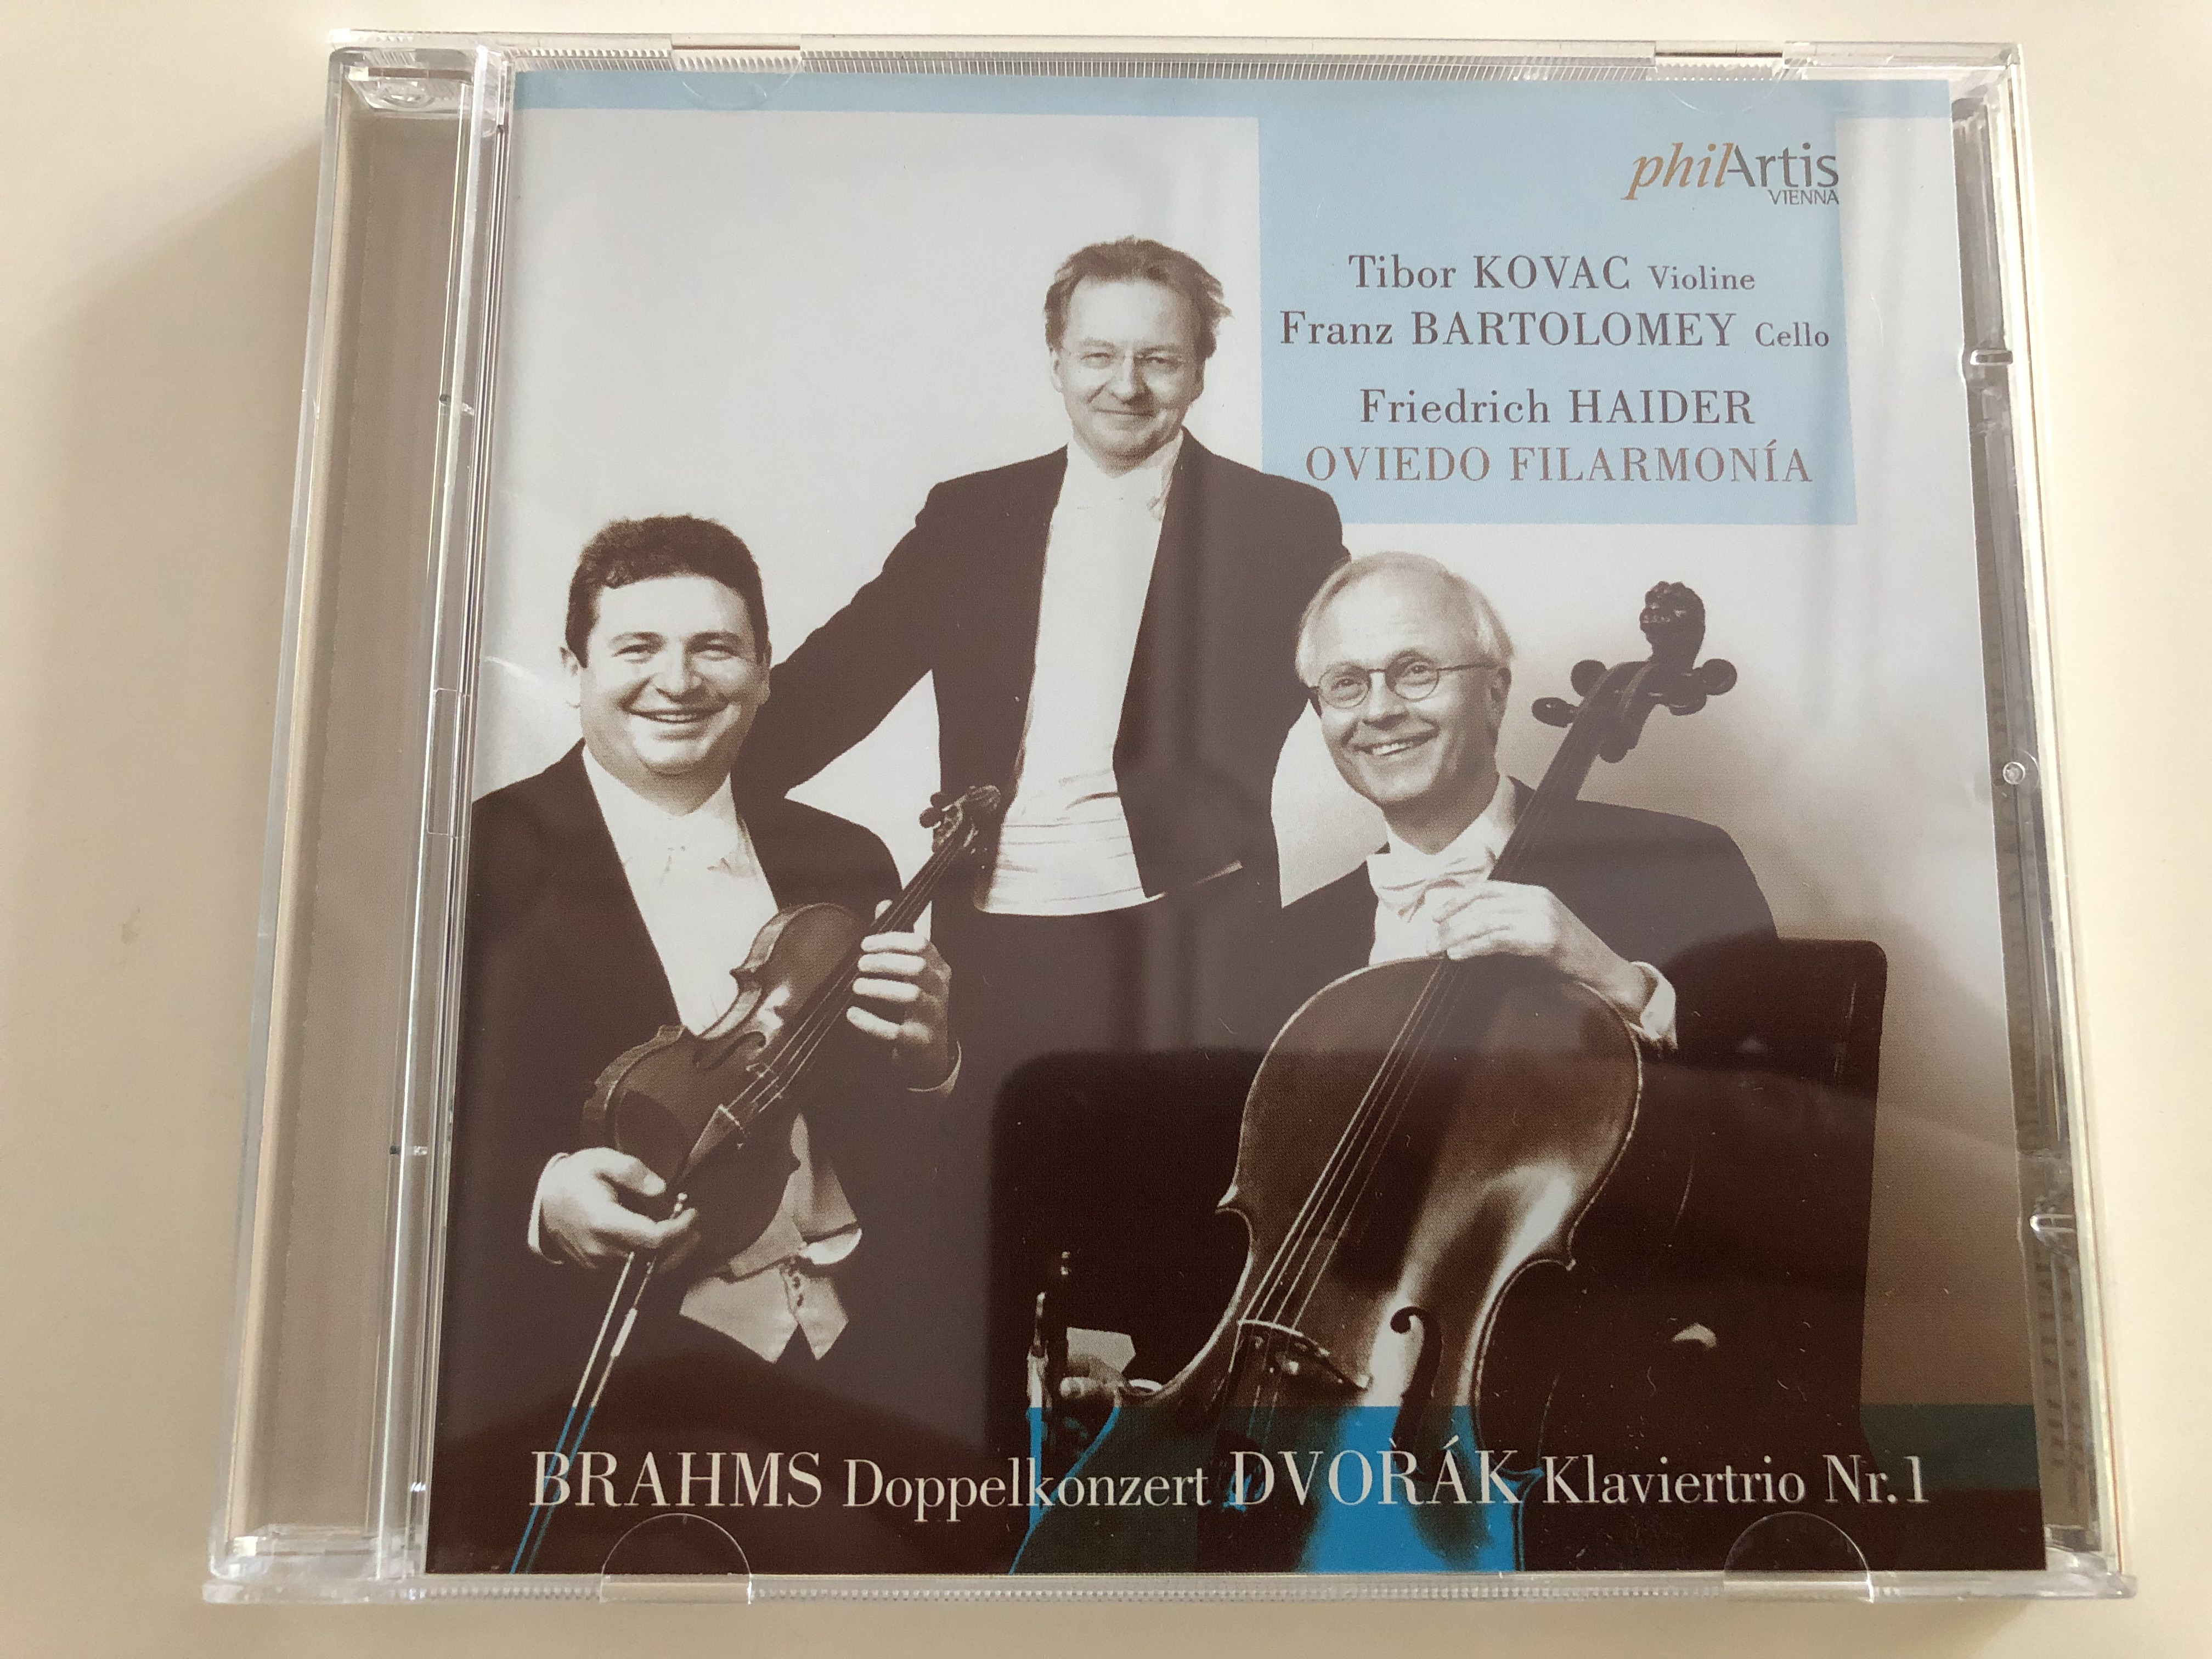 brahms-doppelkonzert-dvor-k-klaviertrio-nr.-1-tibor-kovac-violine-franz-bartolomey-cello-oviedo-filamon-a-conducted-by-friedrich-haider-audio-cd-2006-philartis-pav-0901-1-.jpg